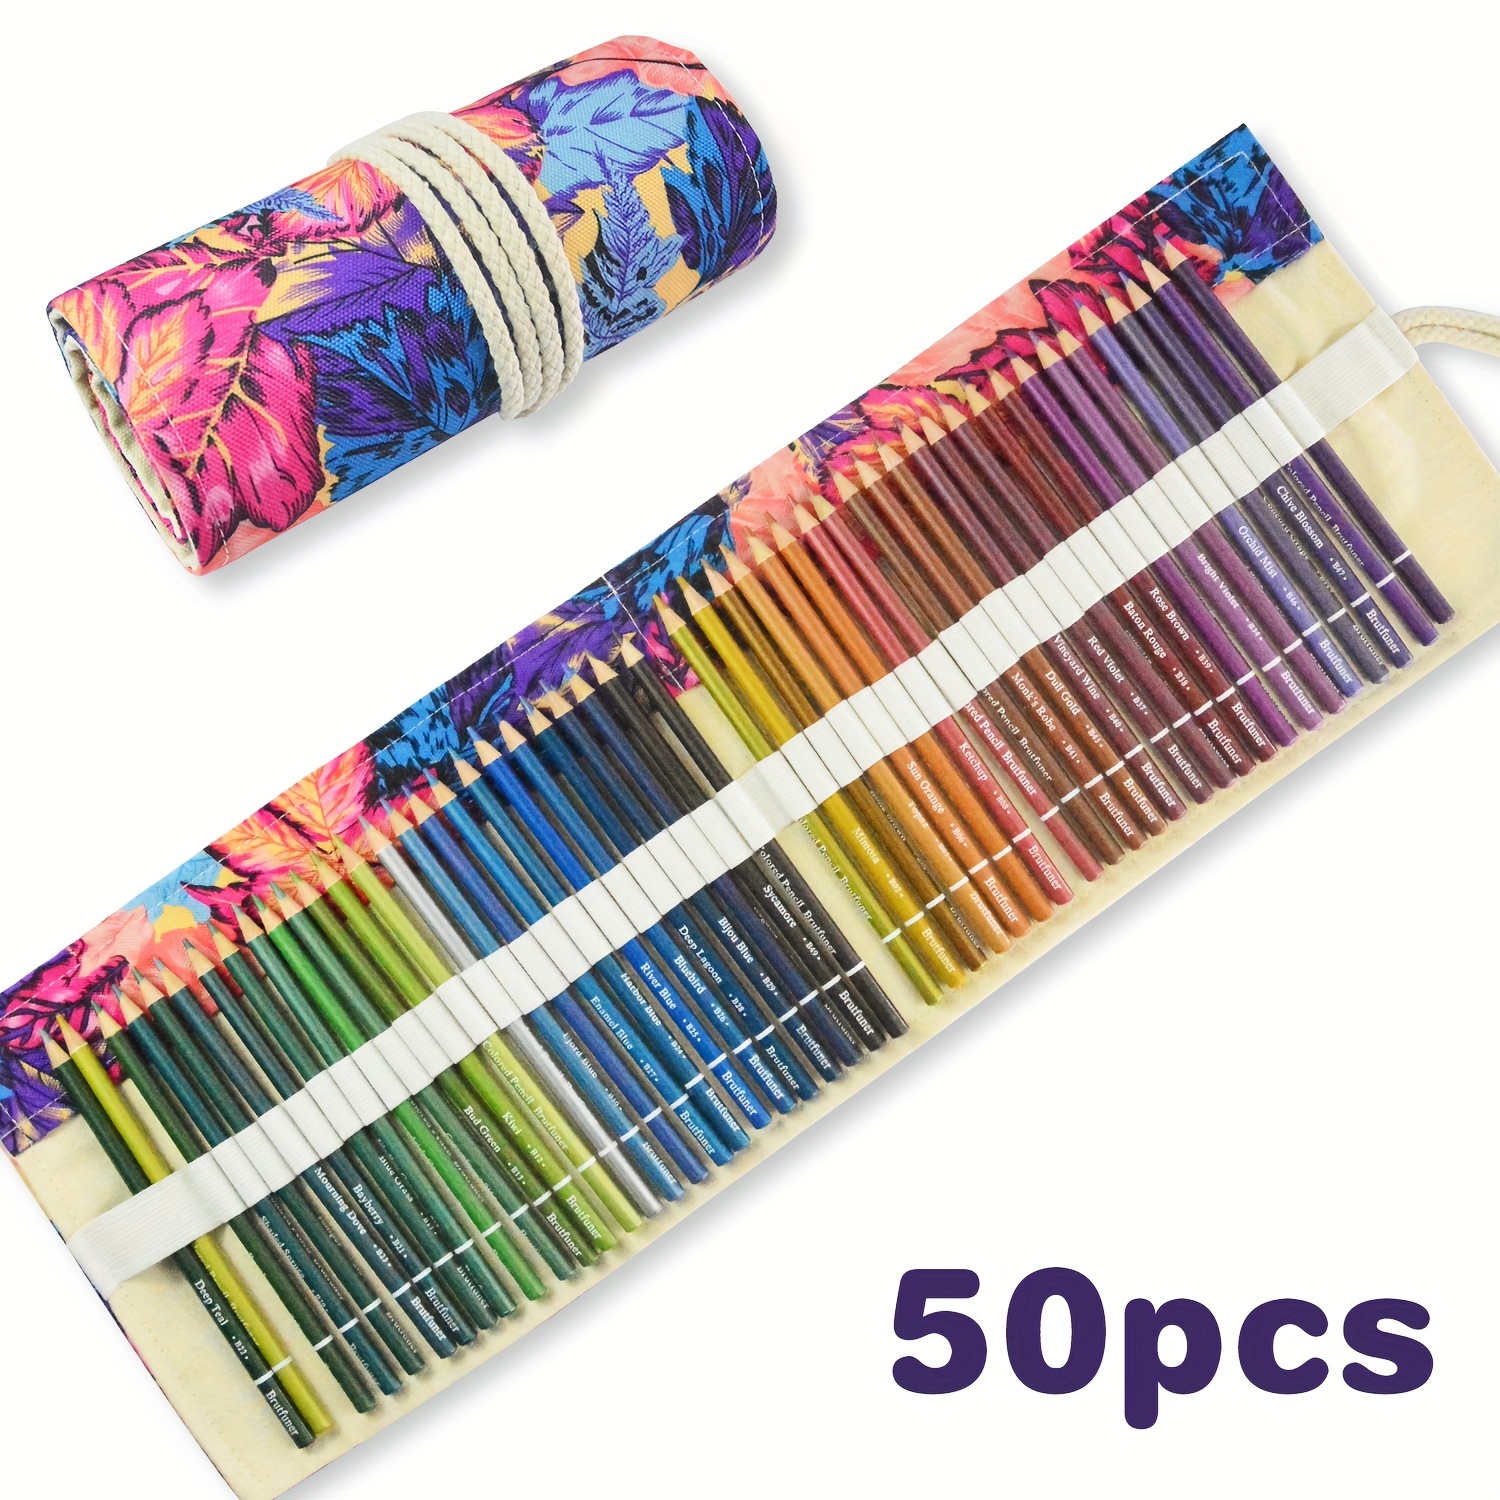 Metallic 50 Professional Colored Pencils, Pre-sharpened Nontoxic